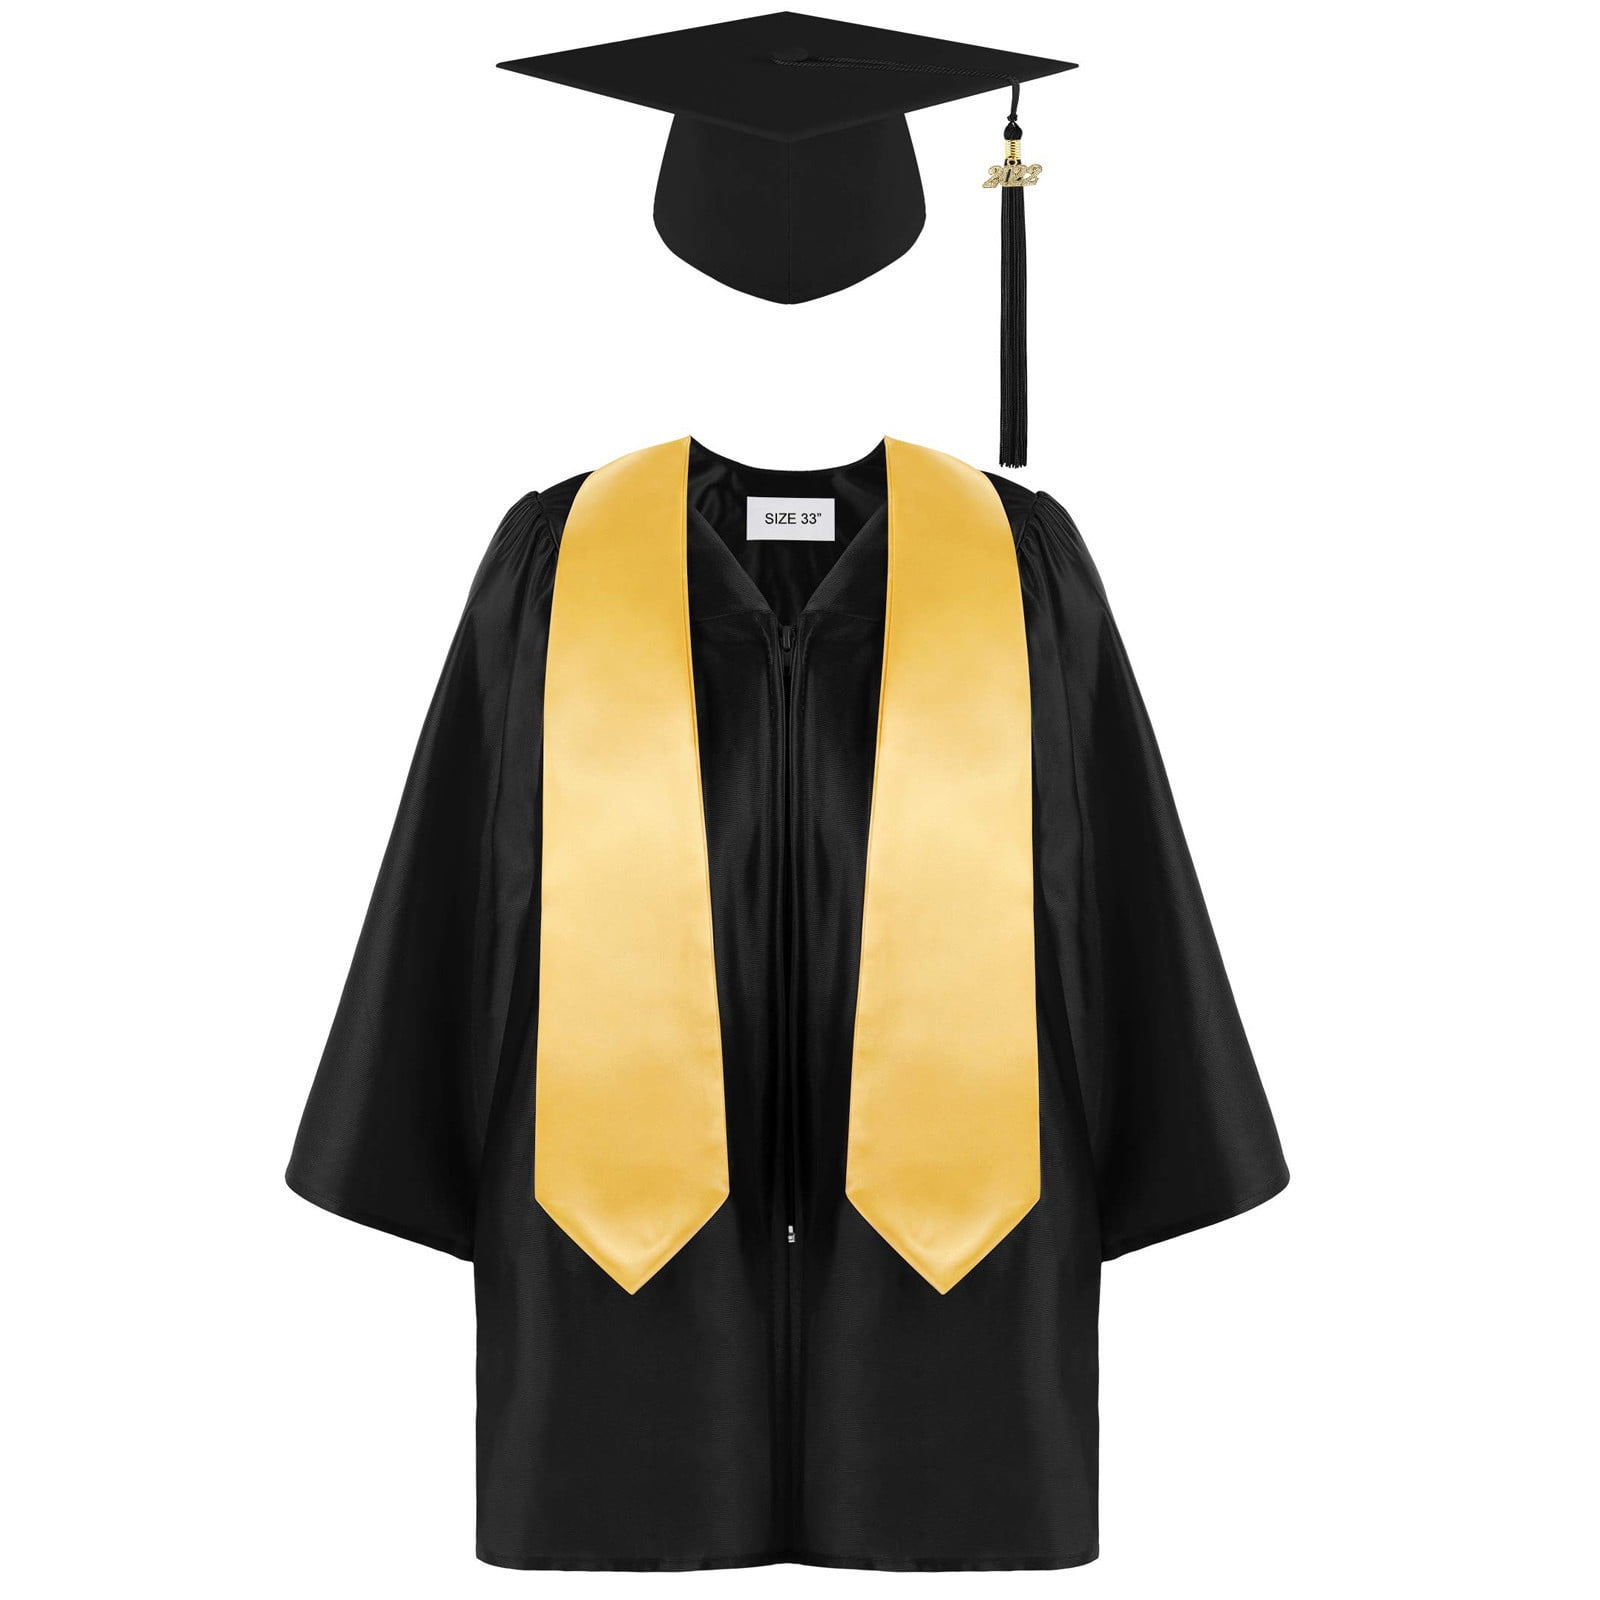 Borita 2021 Matte Graduation Cap and Gown Tassel Set for Junior/Senior High School/Bachelor’s Graduates 